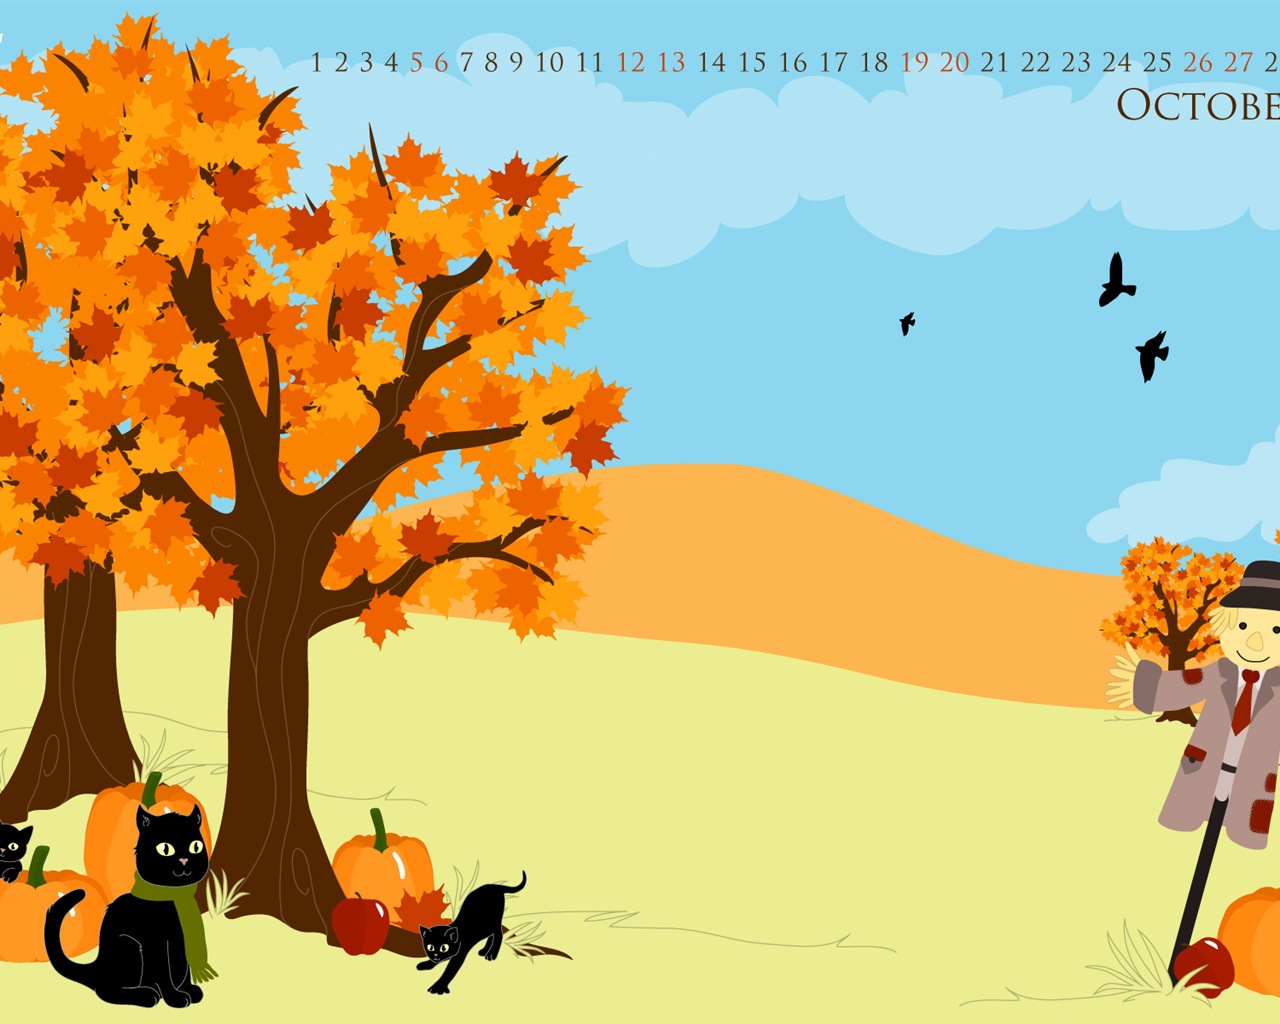 October 2013 calendar wallpaper (2) #15 - 1280x1024